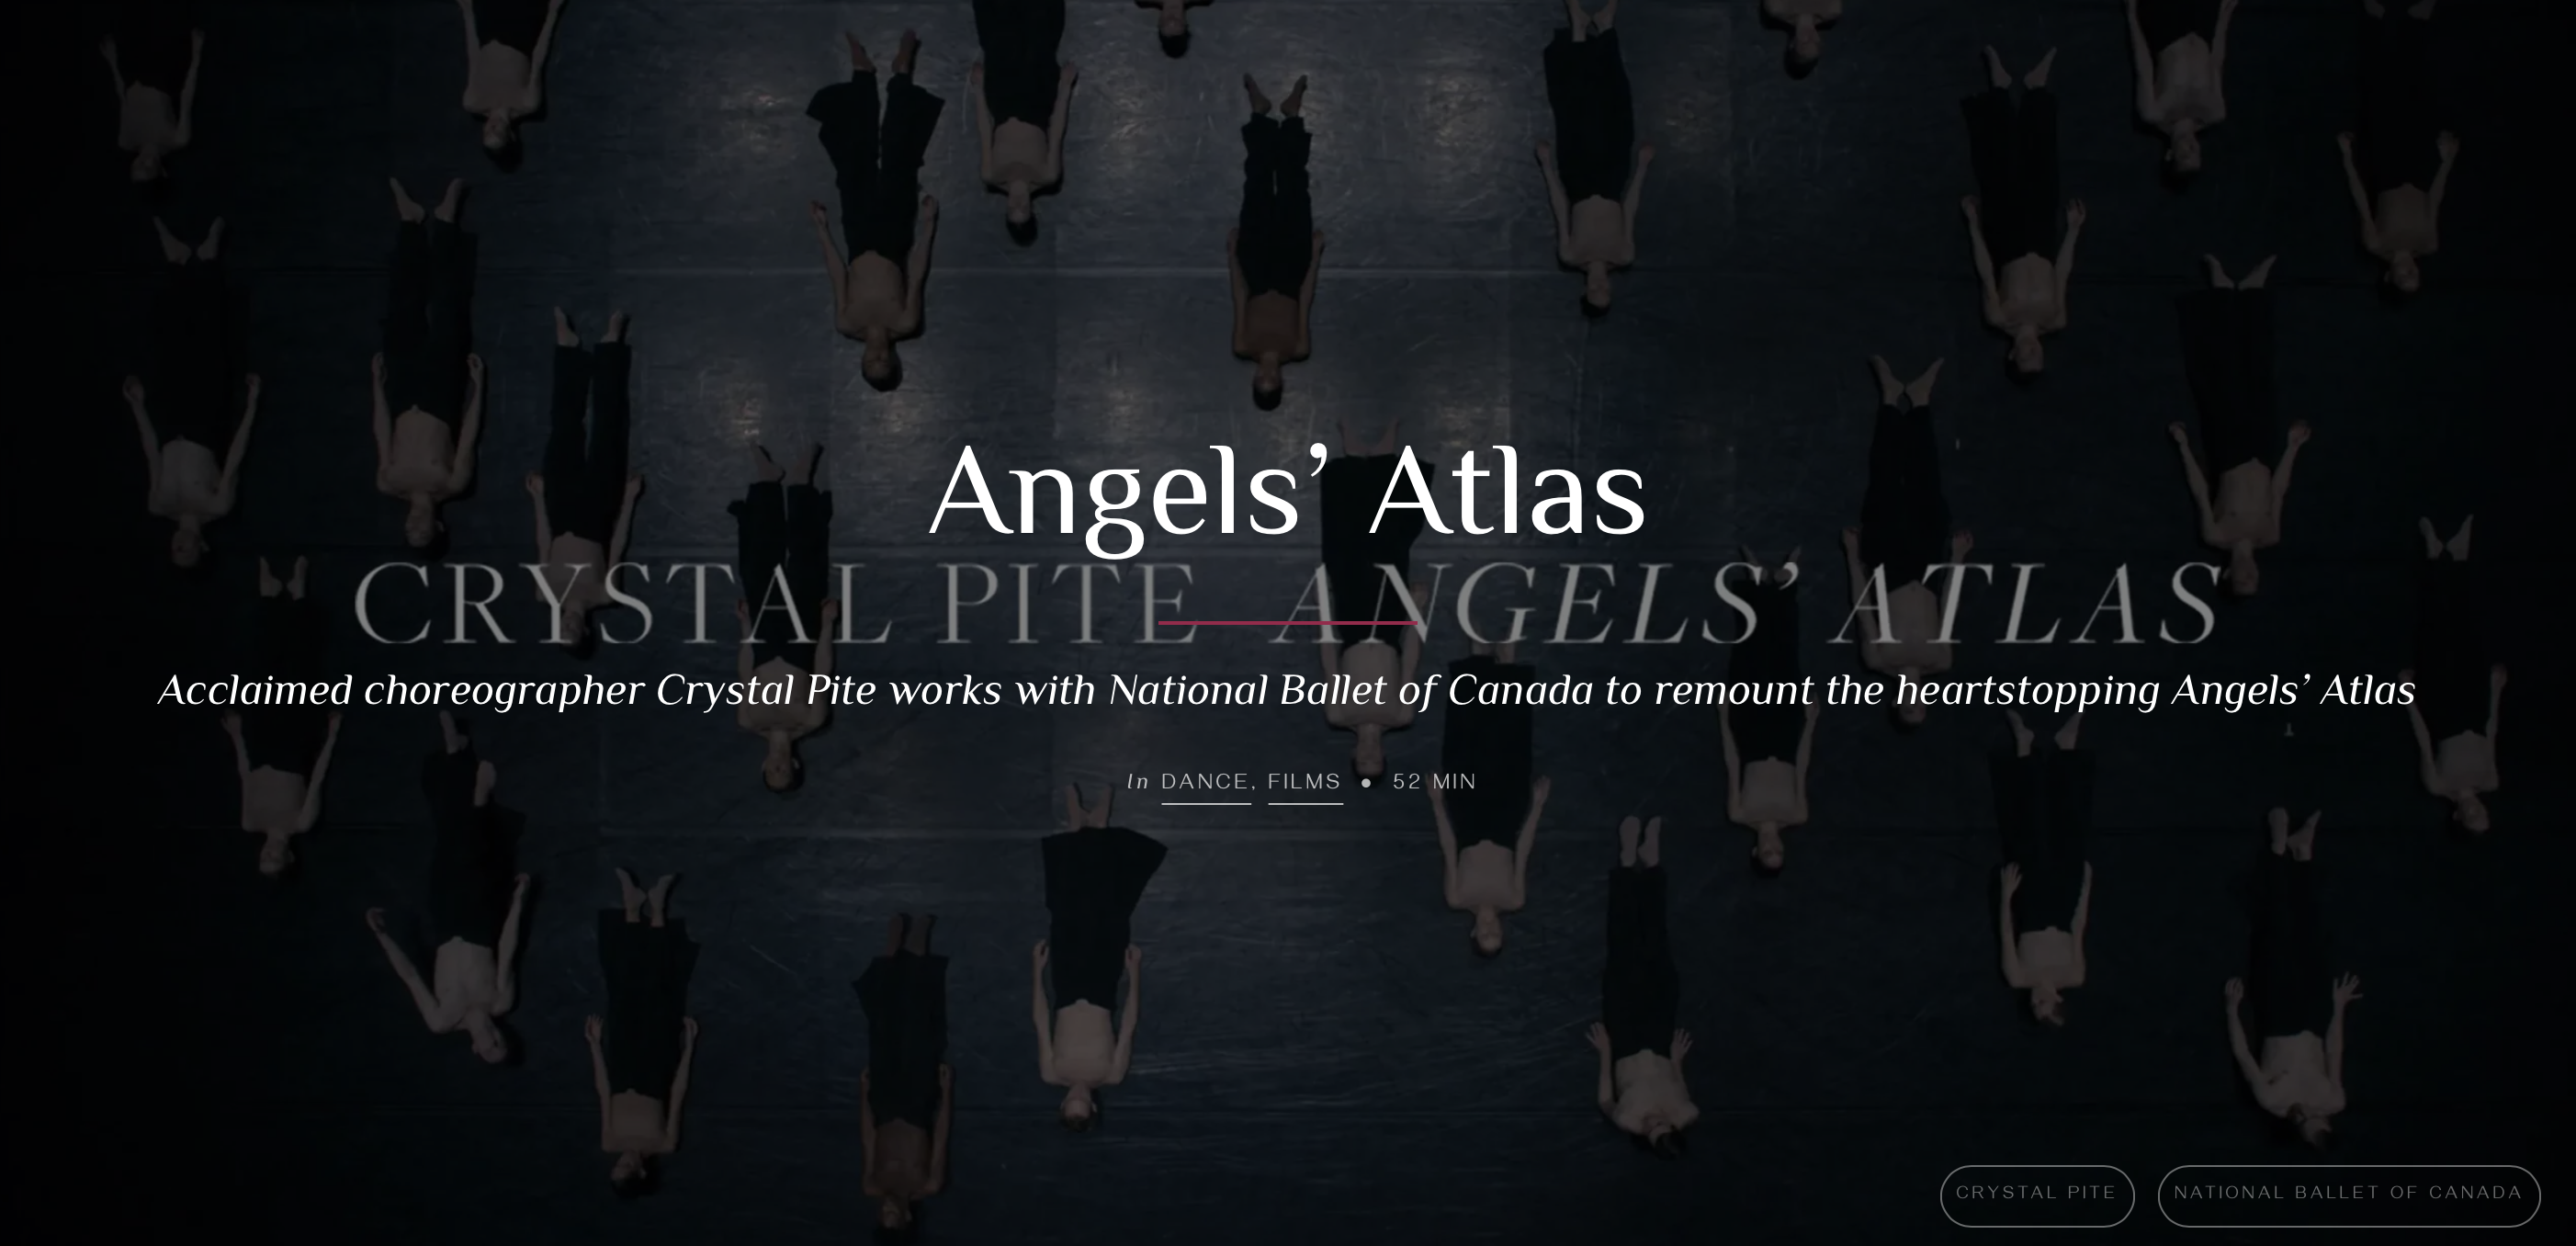 Angels' Atlas - Crystal Pite